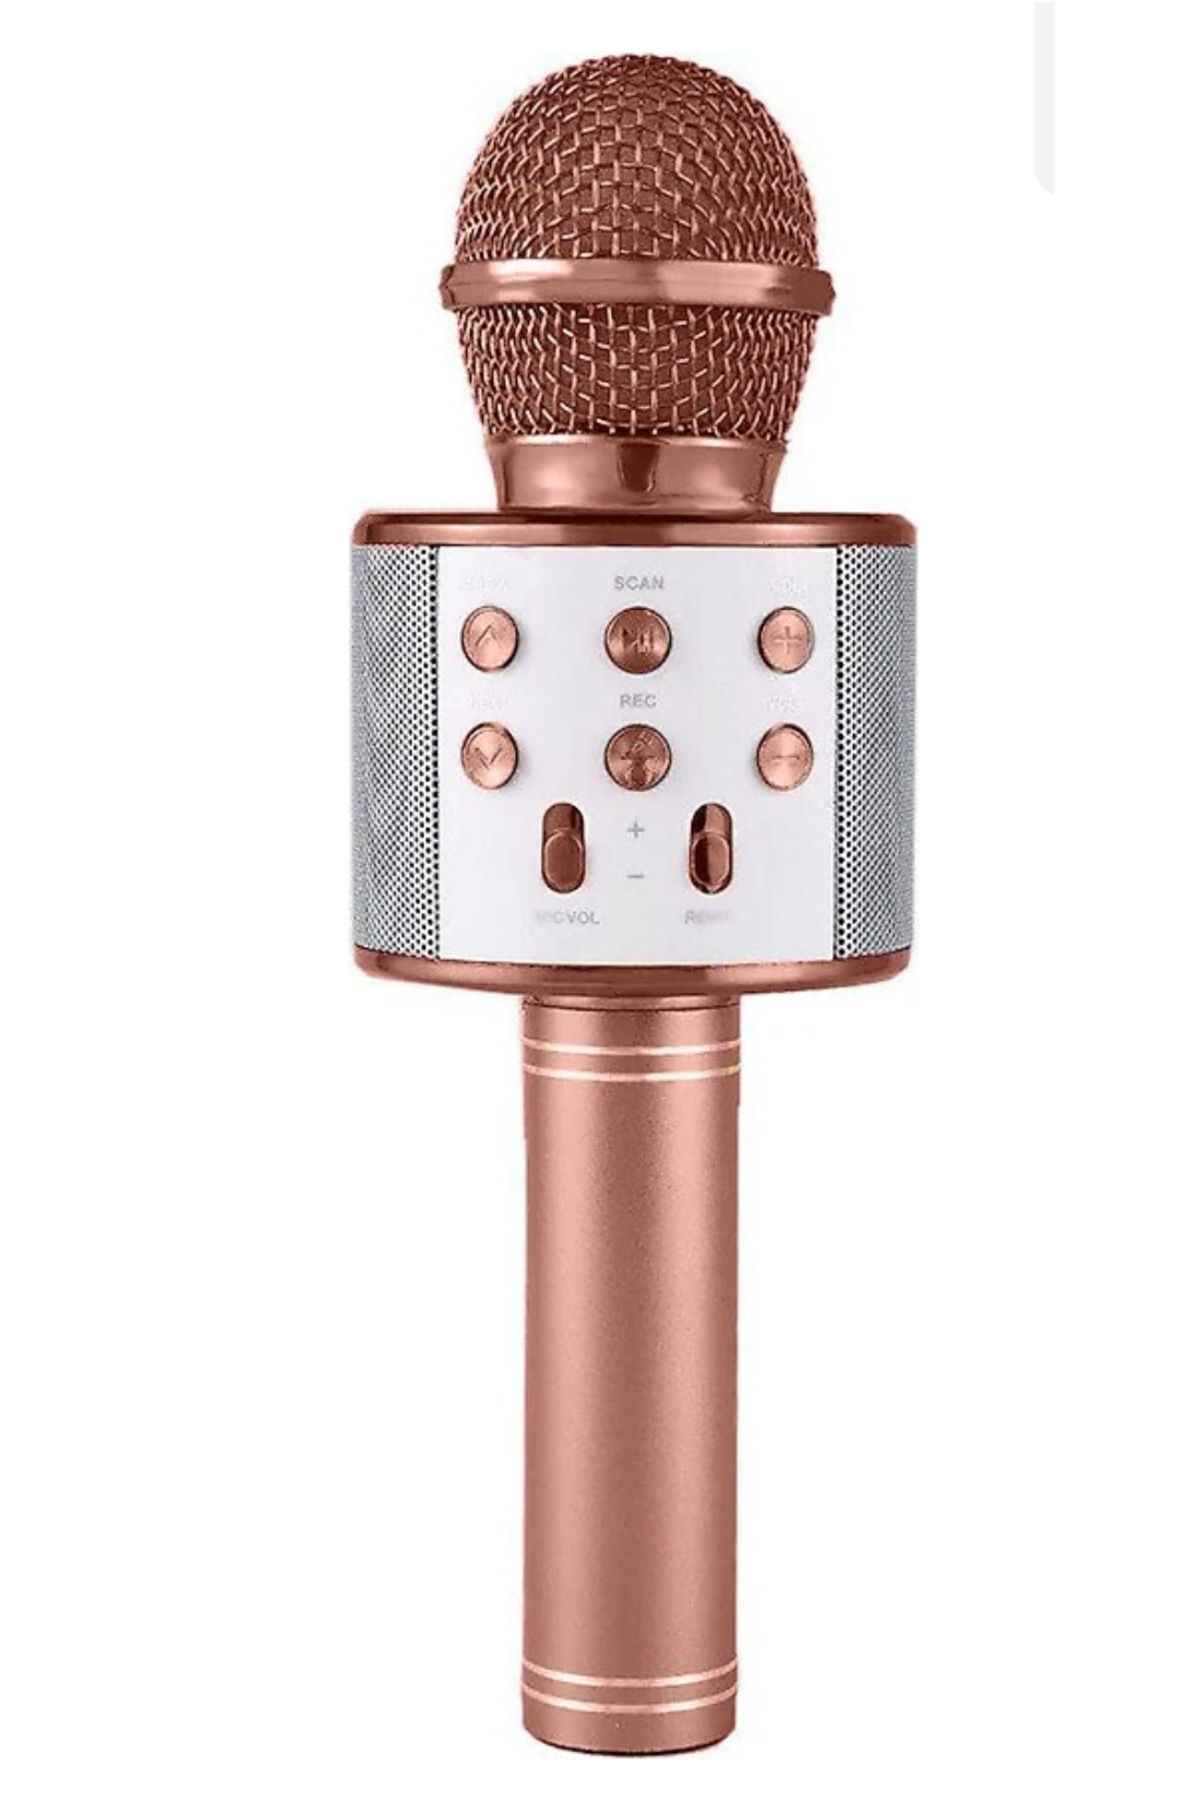 Subzero Tv50 Karaoke Mikrofon (TÜRKÇE SESLENDİRME) Karaoke Mikrofon Rose Gold Speaker Bluetooth